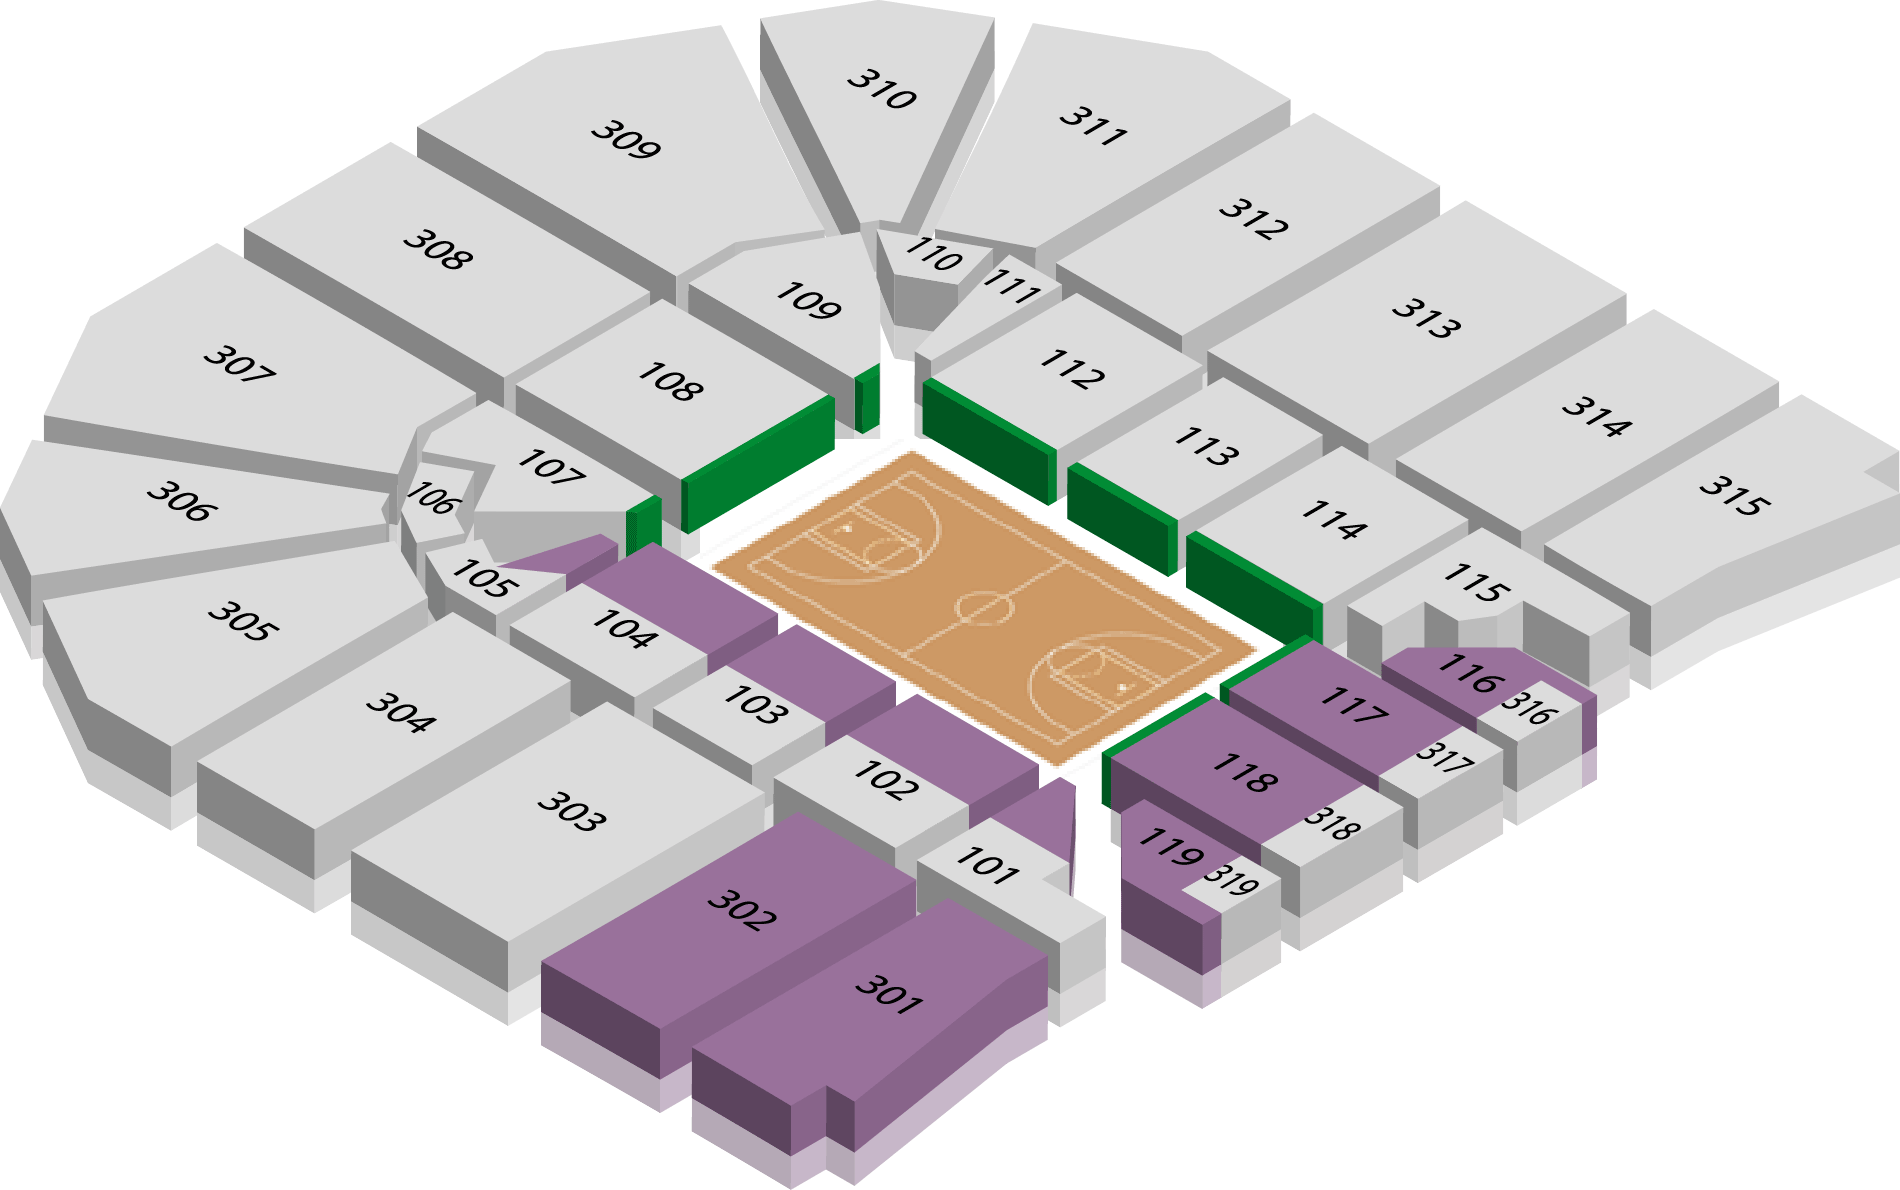 John Paul Jones Arena Seating Chart Matttroy